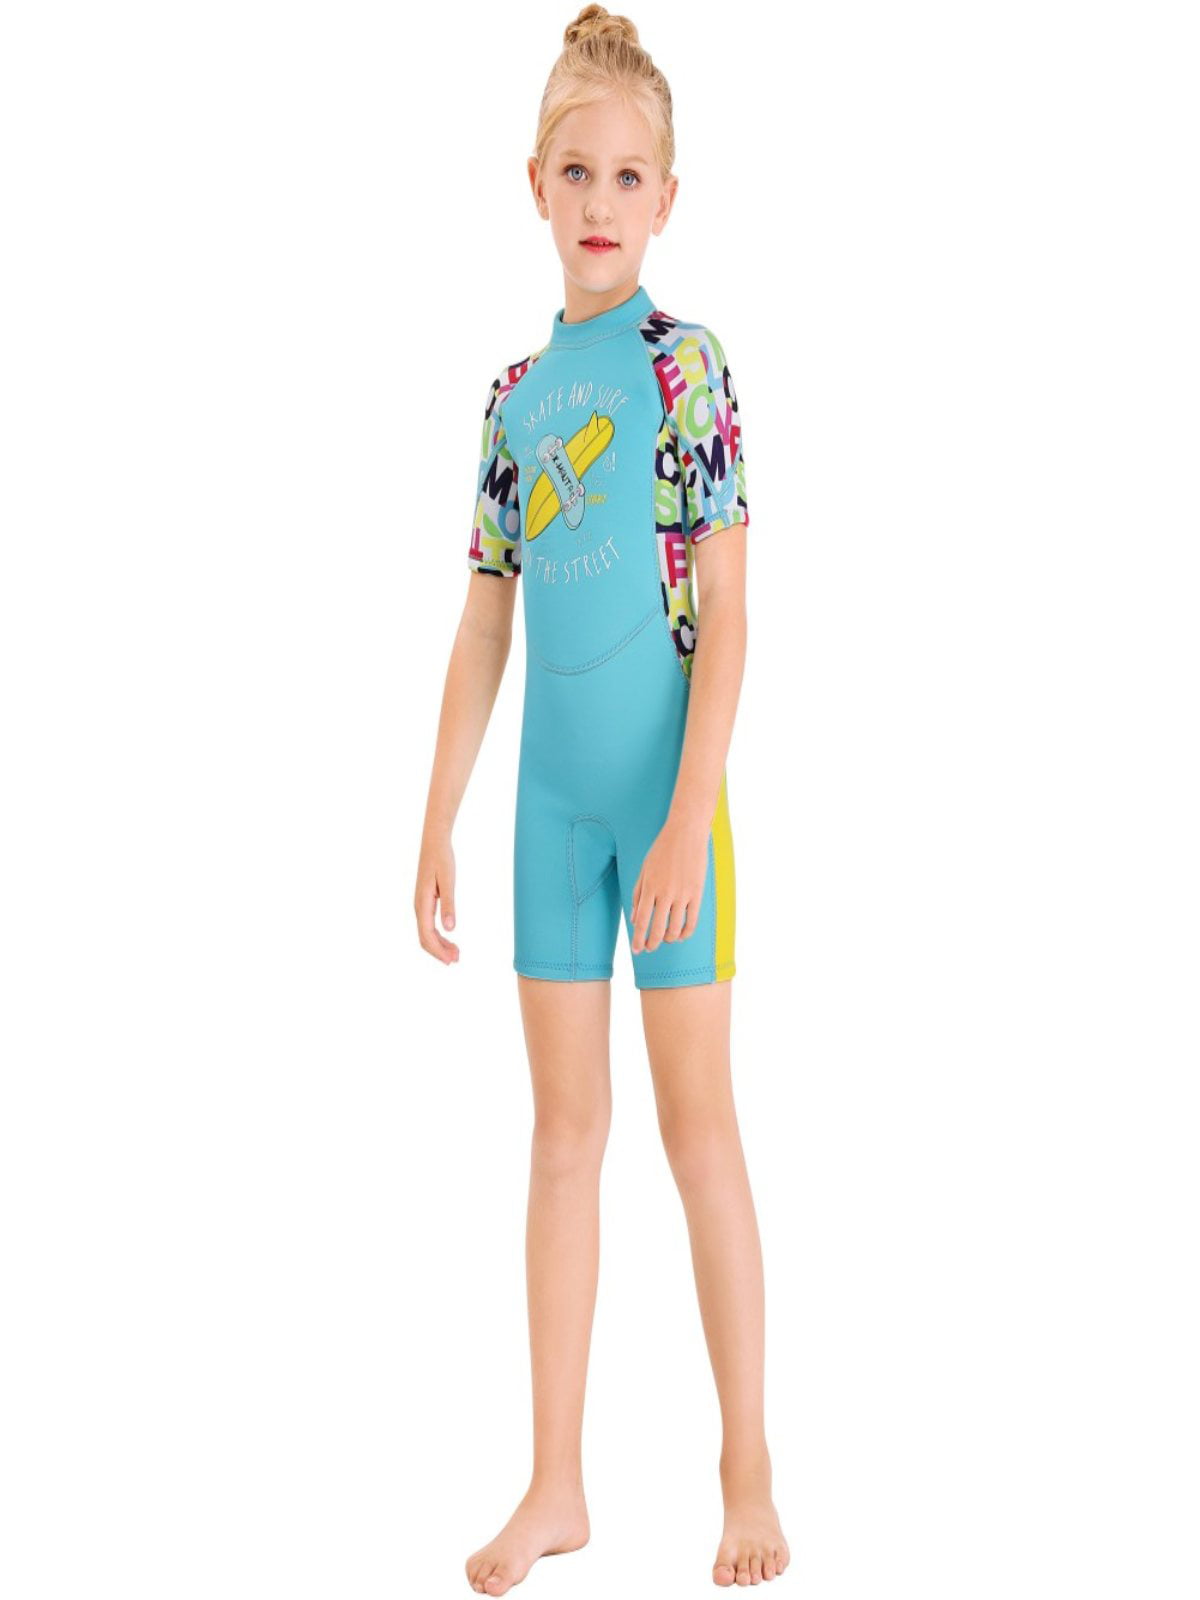 Details about   Kids Children Boy 2.5MM SCR Neoprene Diving Suit Swim Scuba Surf Warm Wetsuits